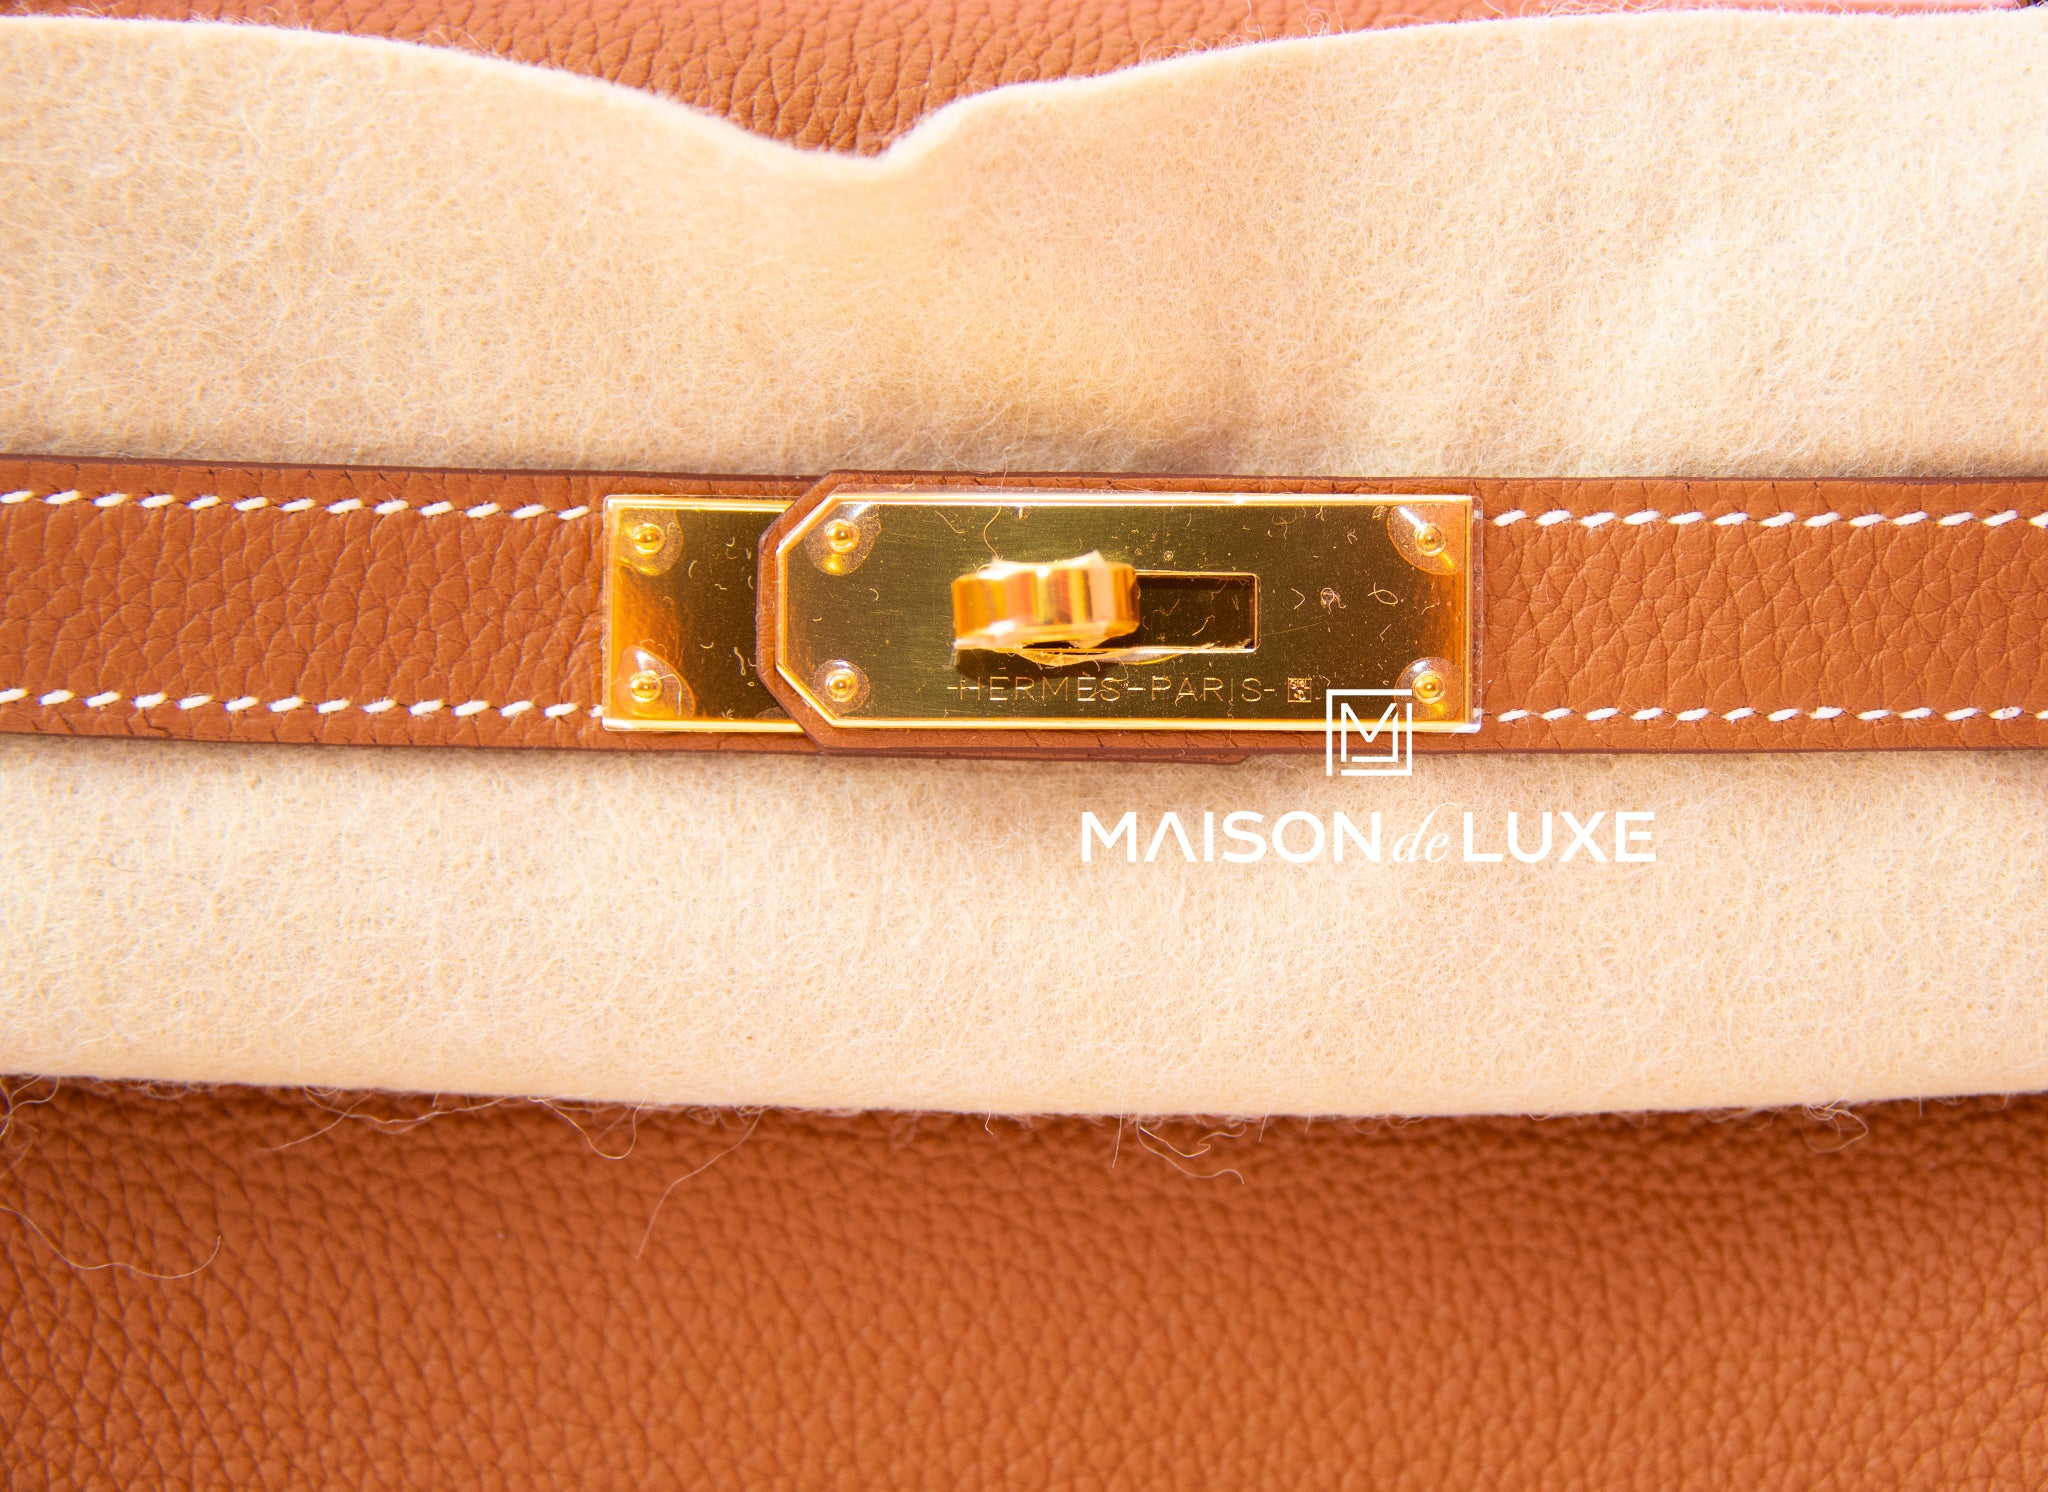 Hermès Kelly 28 Togo Leather Handbag